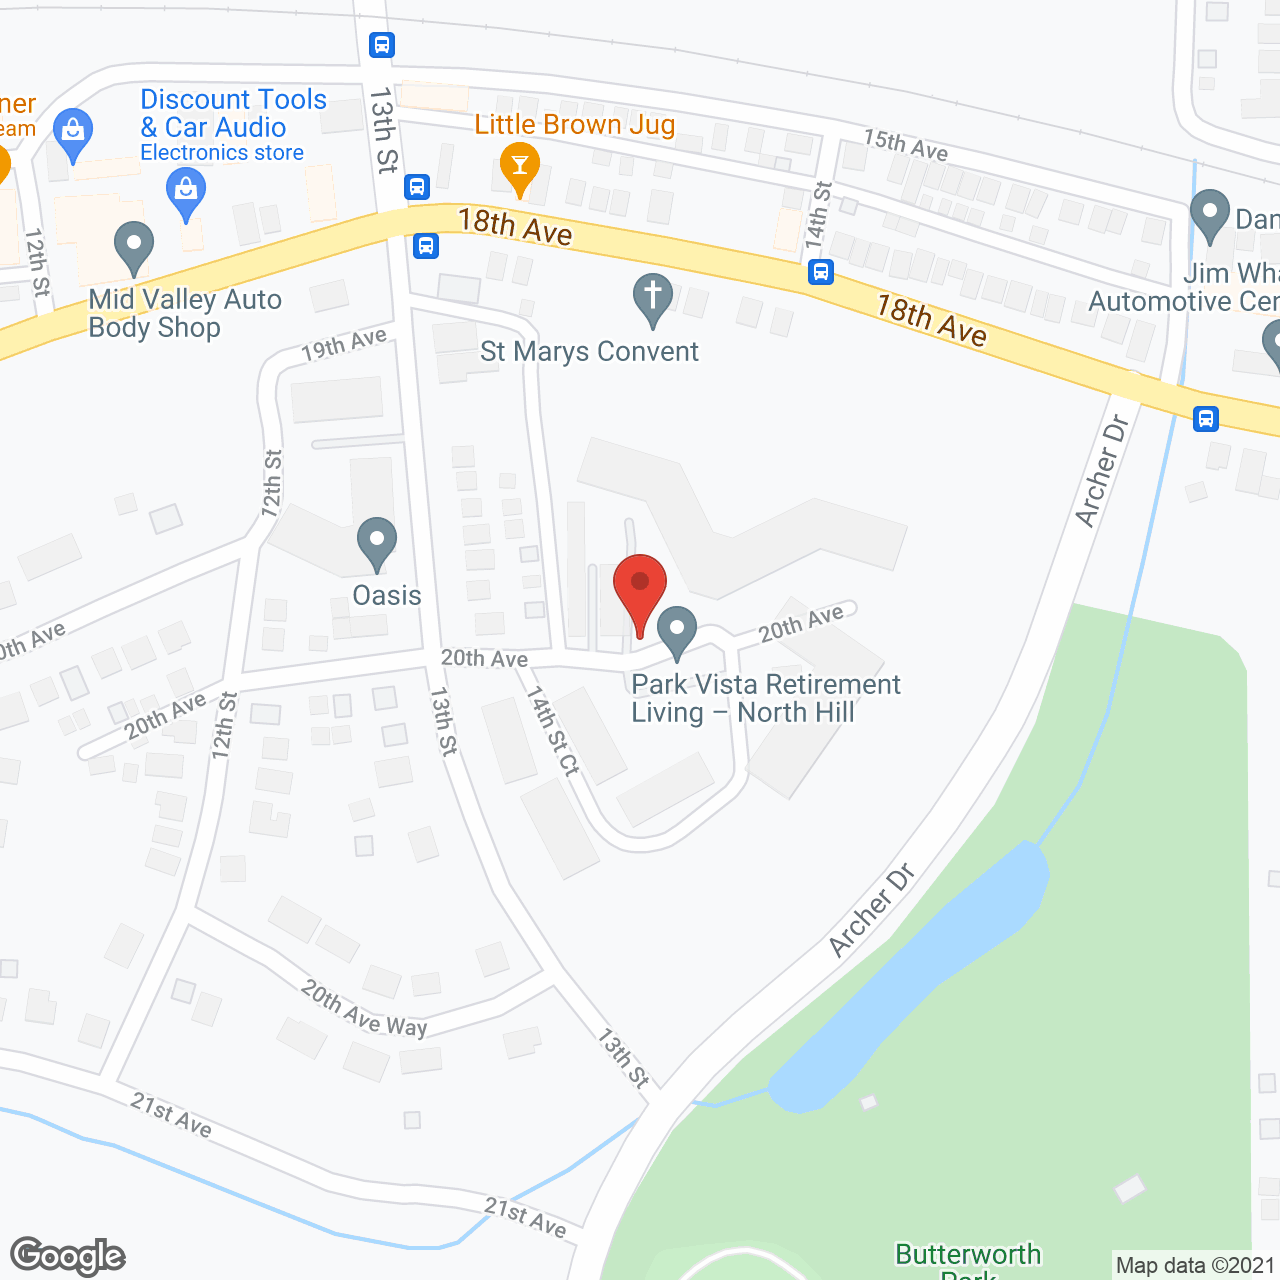 Park Vista - North Hill in google map